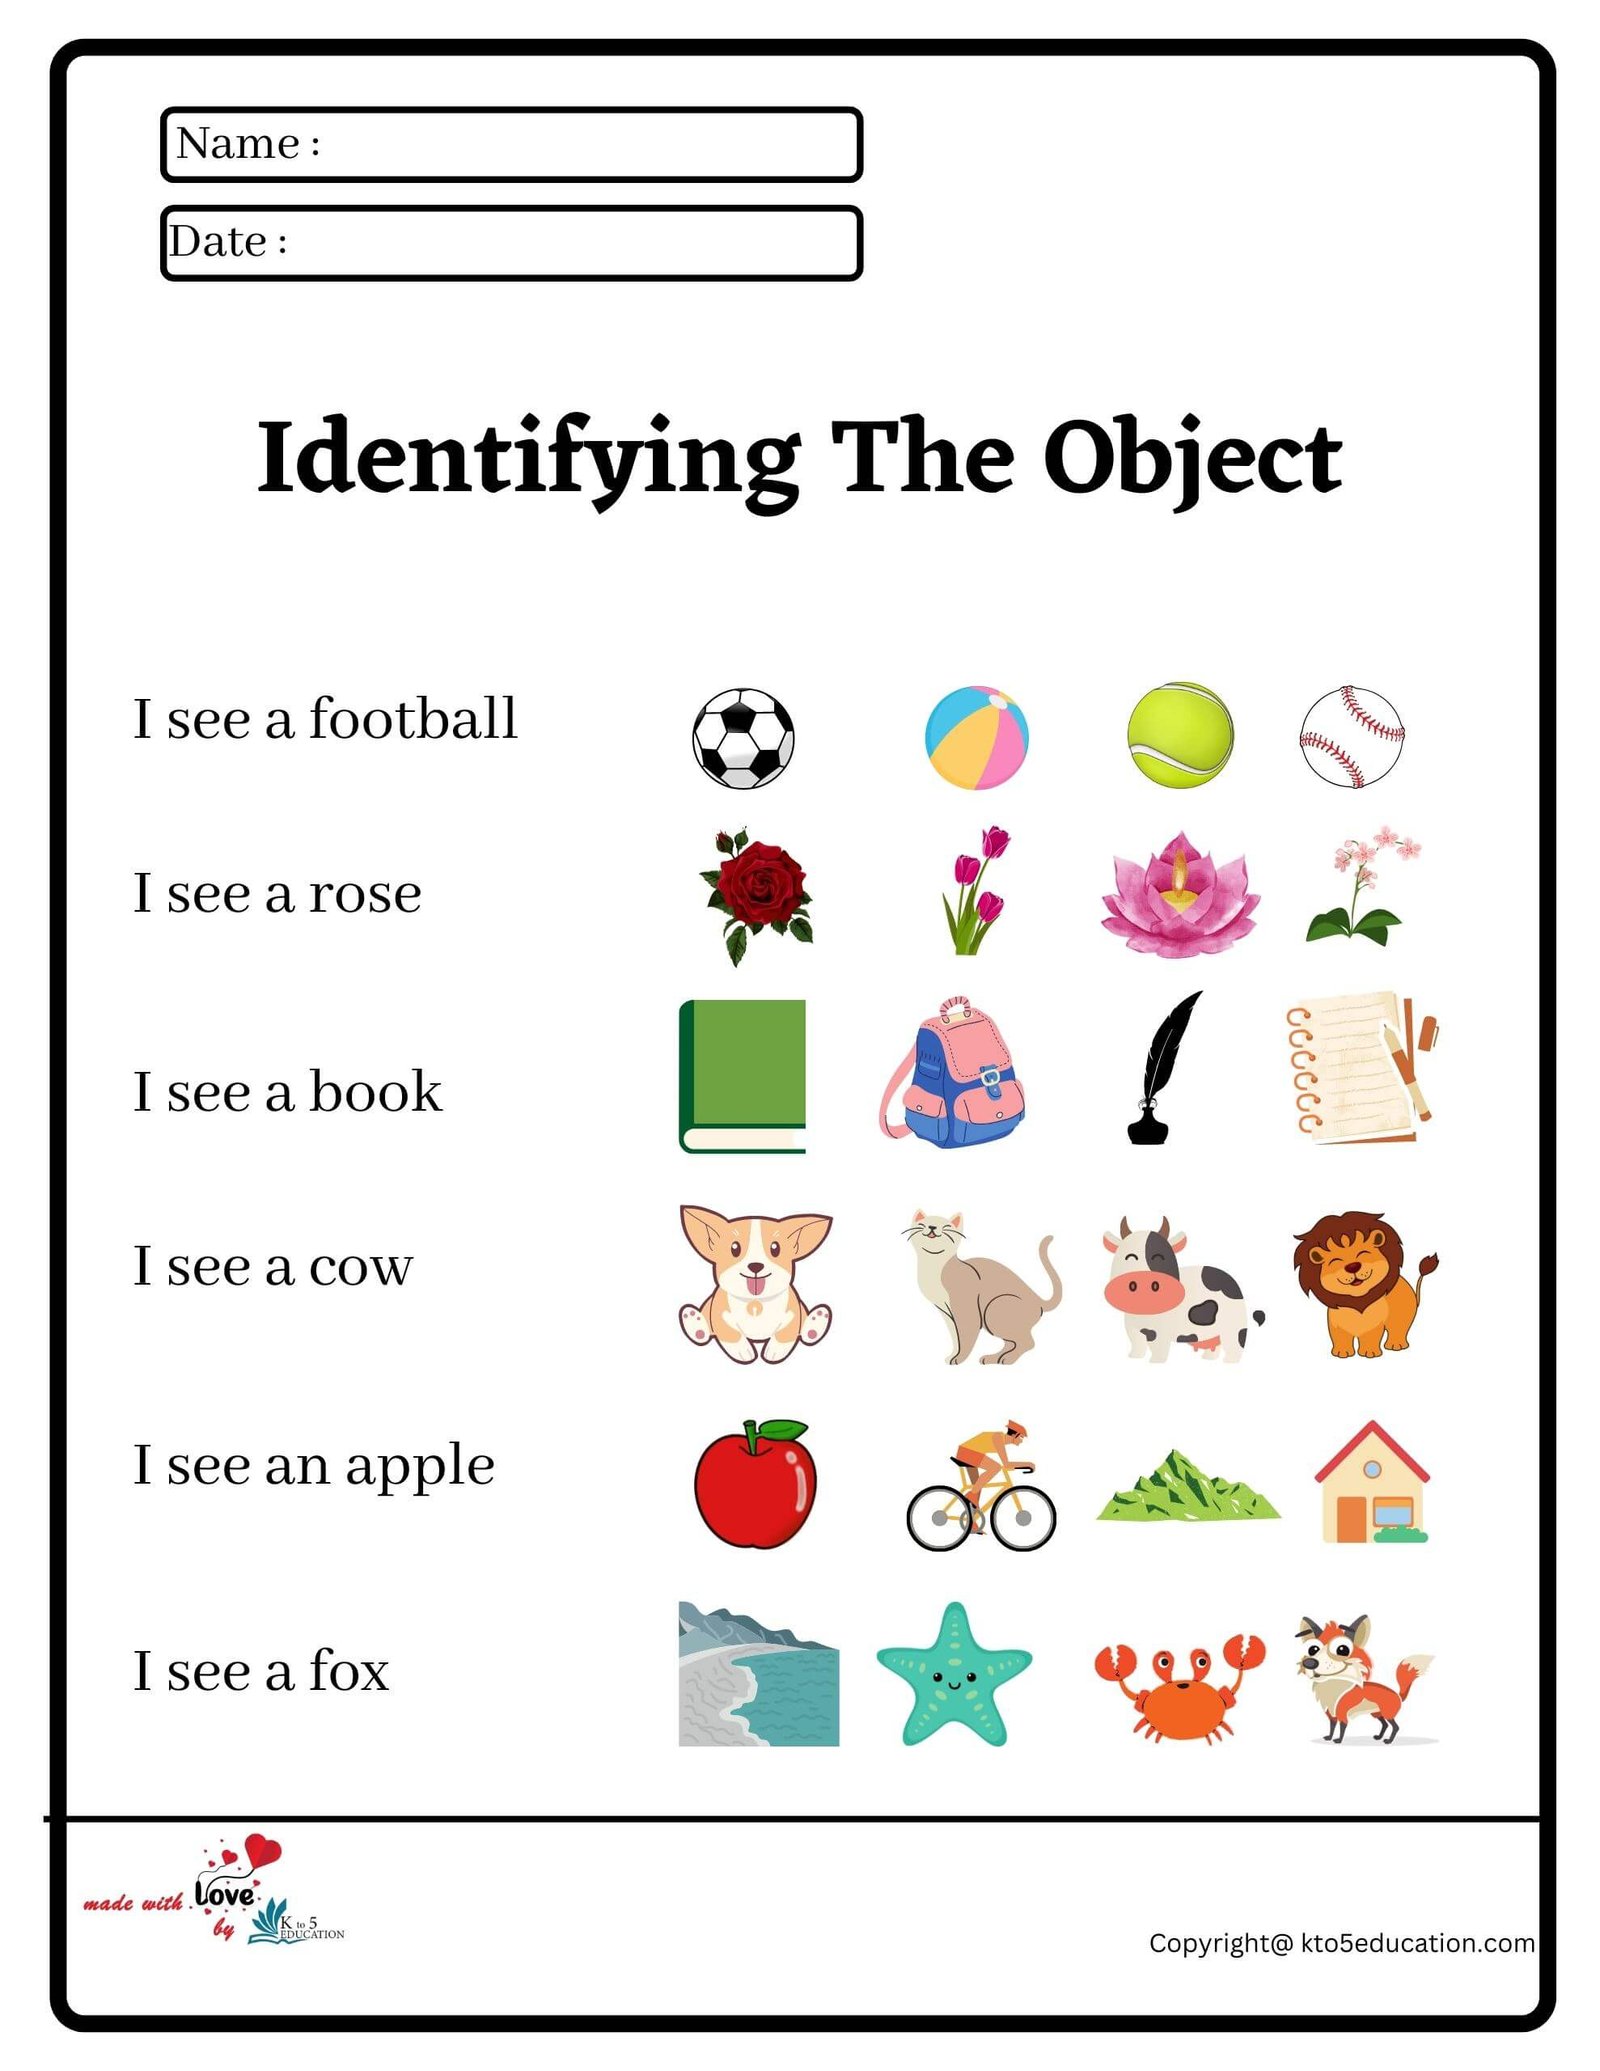 Identifying the Object Worksheet 2